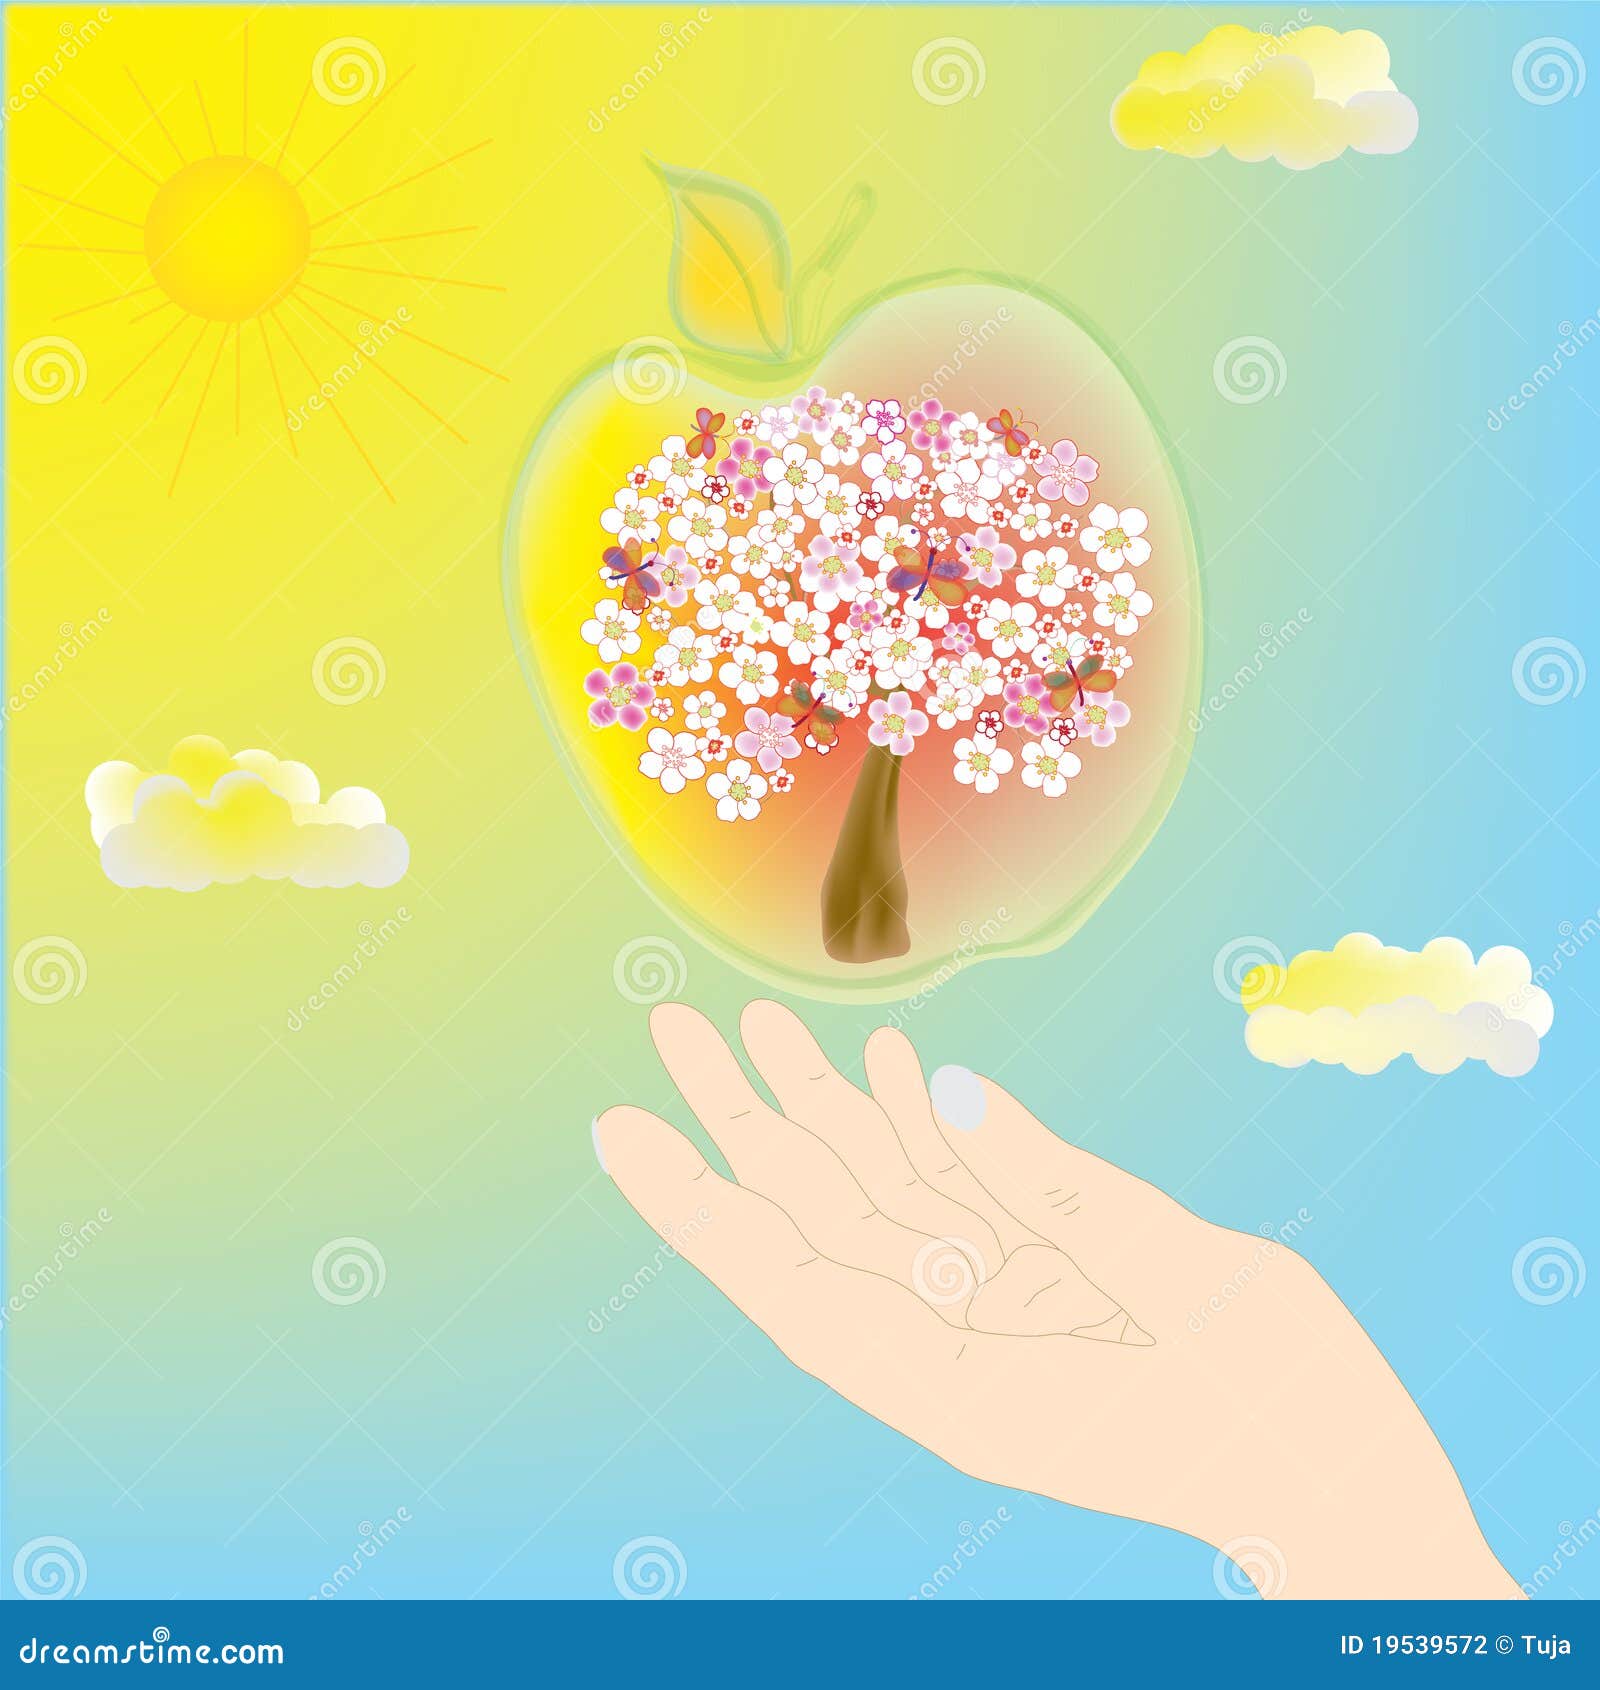 Яблоко на ладони рисунок